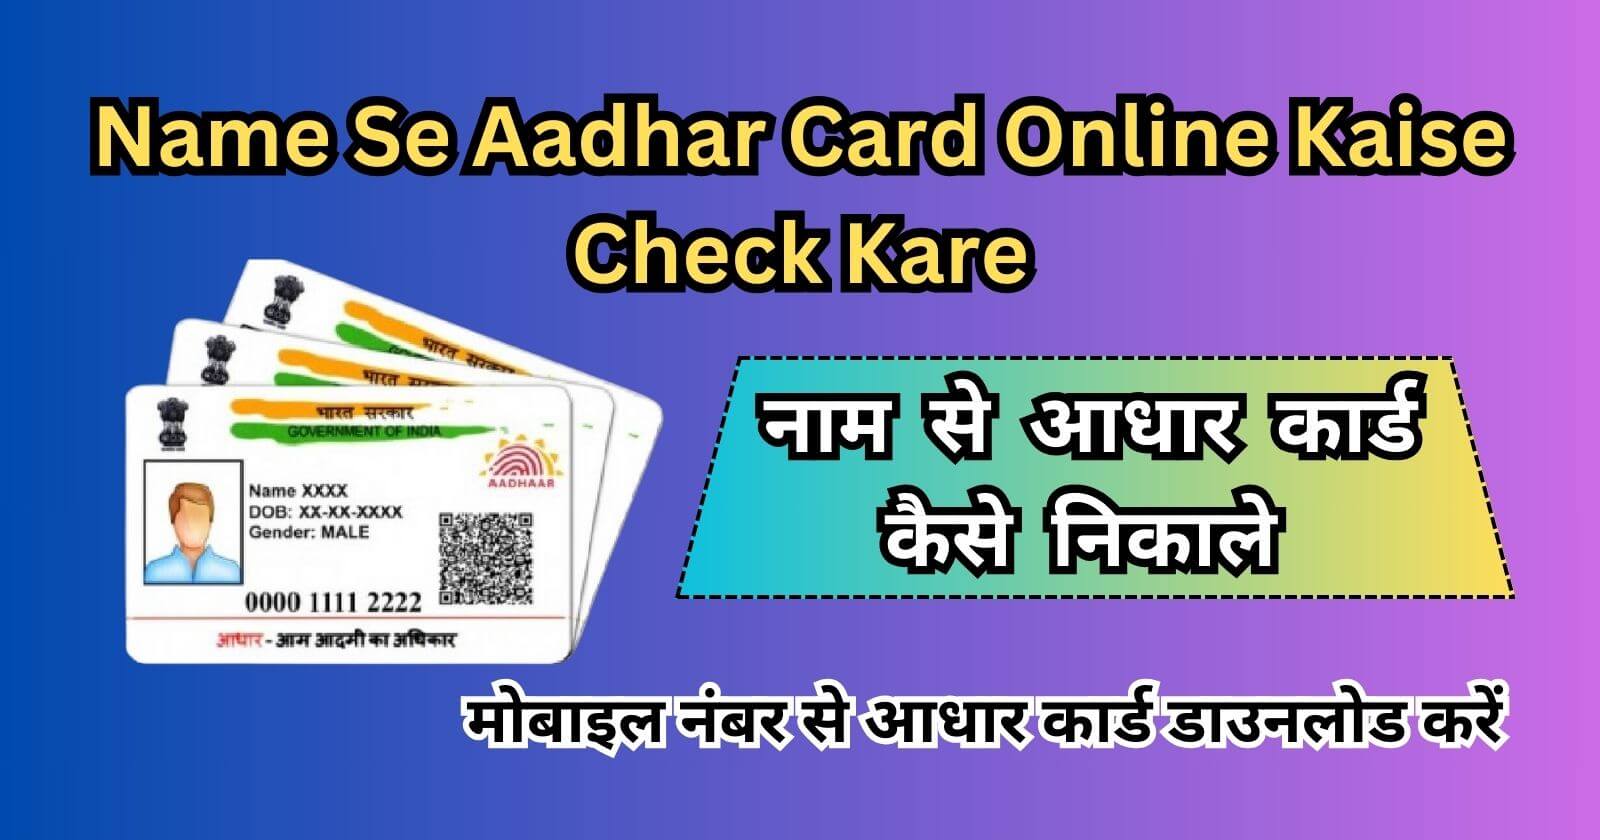 Name Se Aadhar Card Online Kaise Check Kare